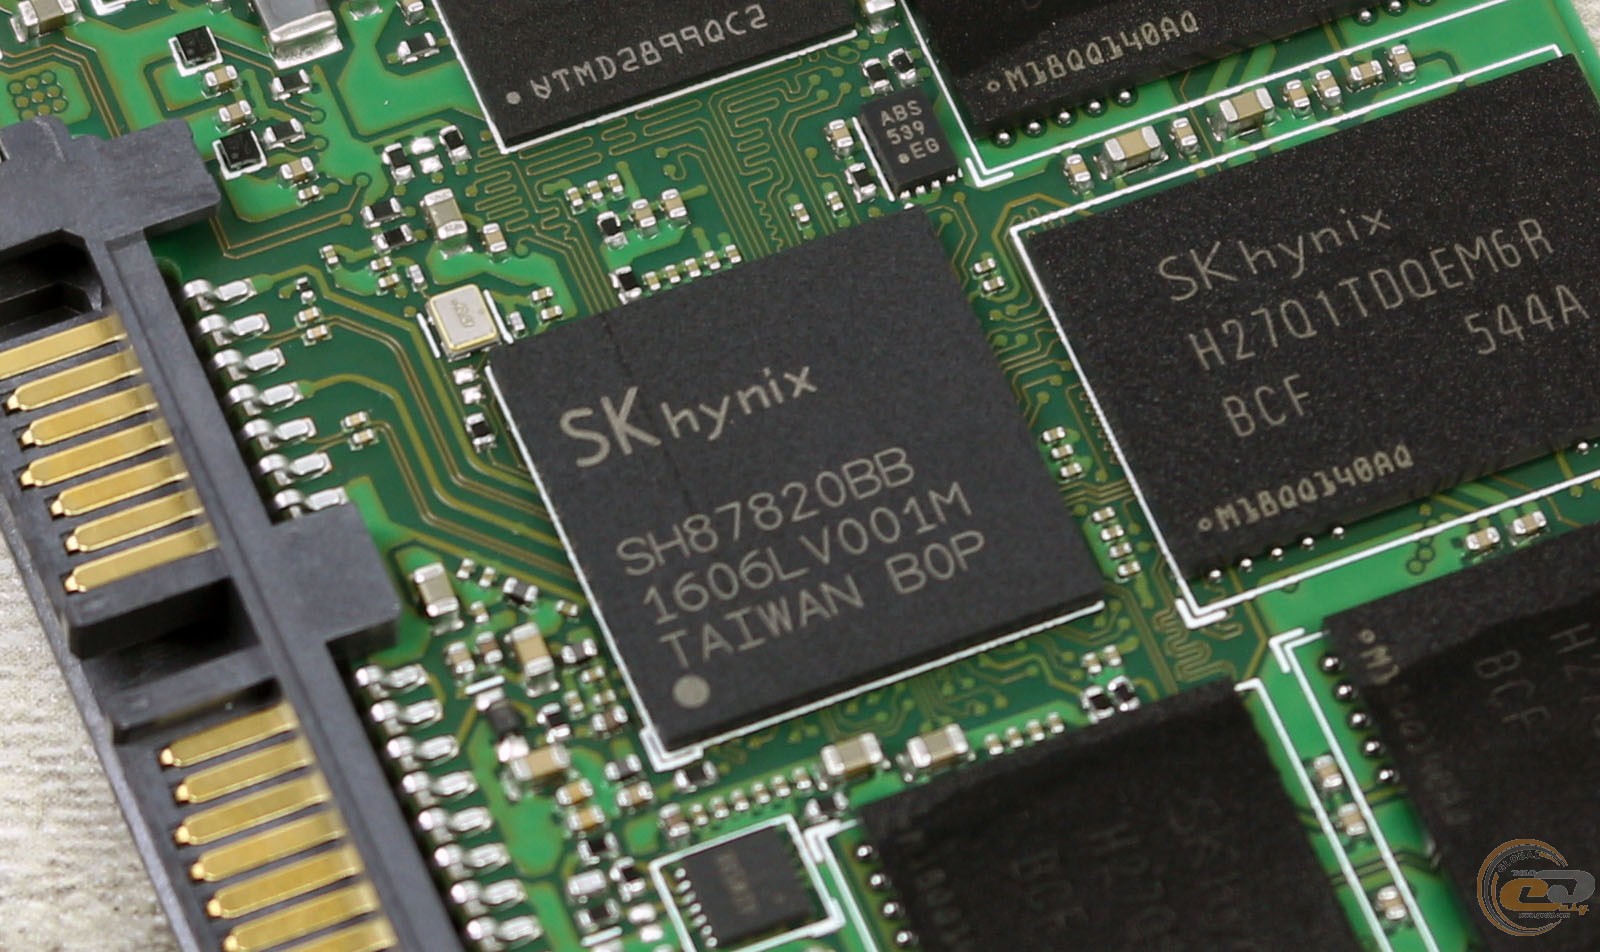 Оперативная и встроенная память смартфон. Hynix sh87820bb. Чипы Hynix. Чипы оперативной памяти Hynix.